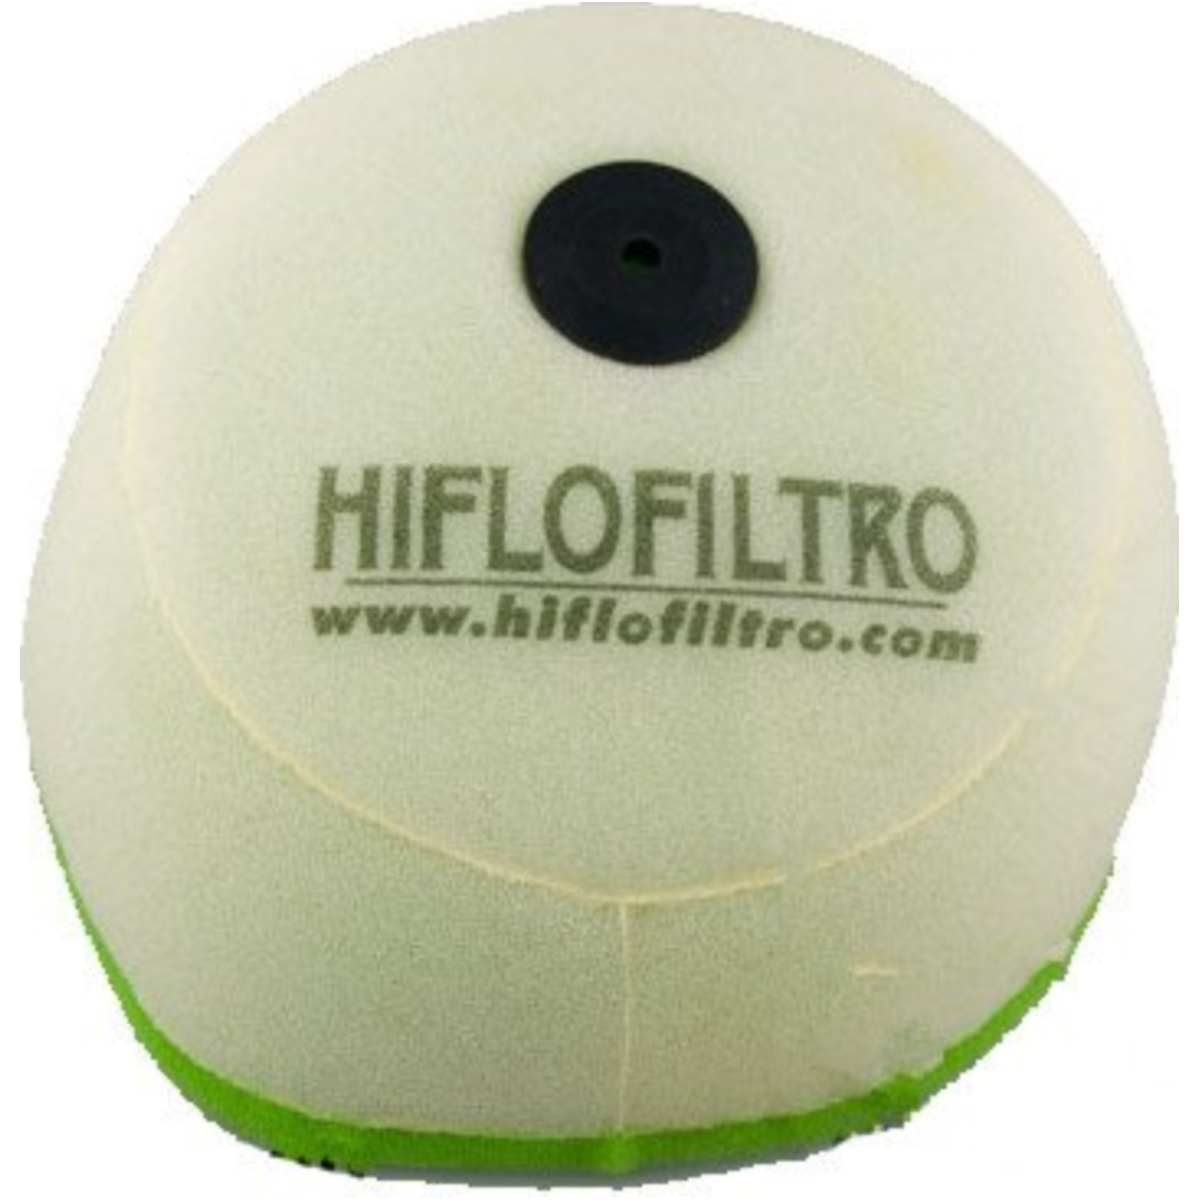 Hiflo hff2020 luftfilter foam hiflo von HIFLO